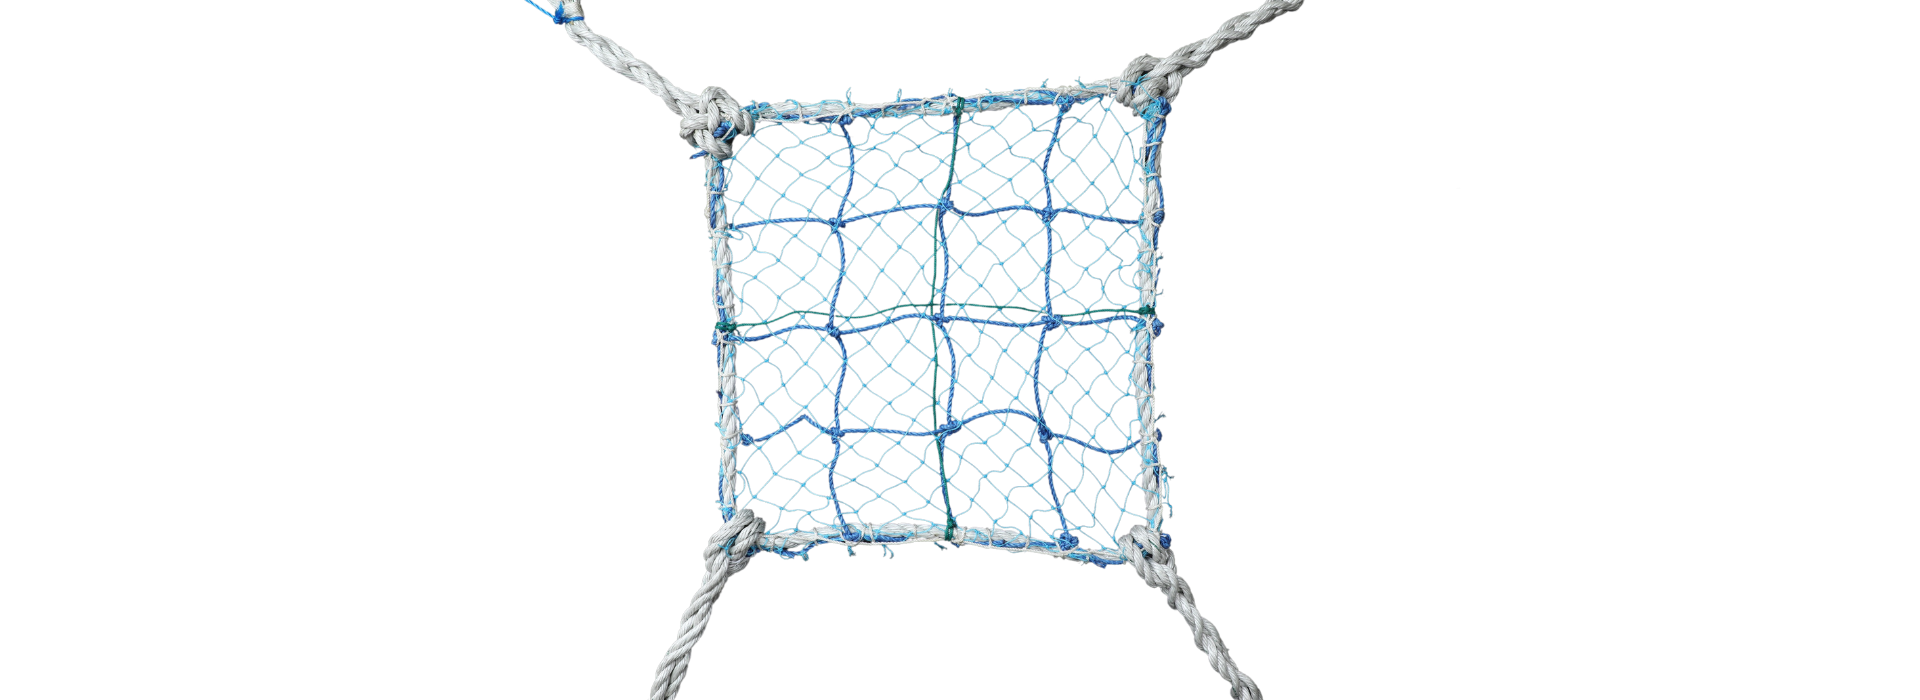 4 MM PP Safety Net (Blue) of Garware Technical Fibres